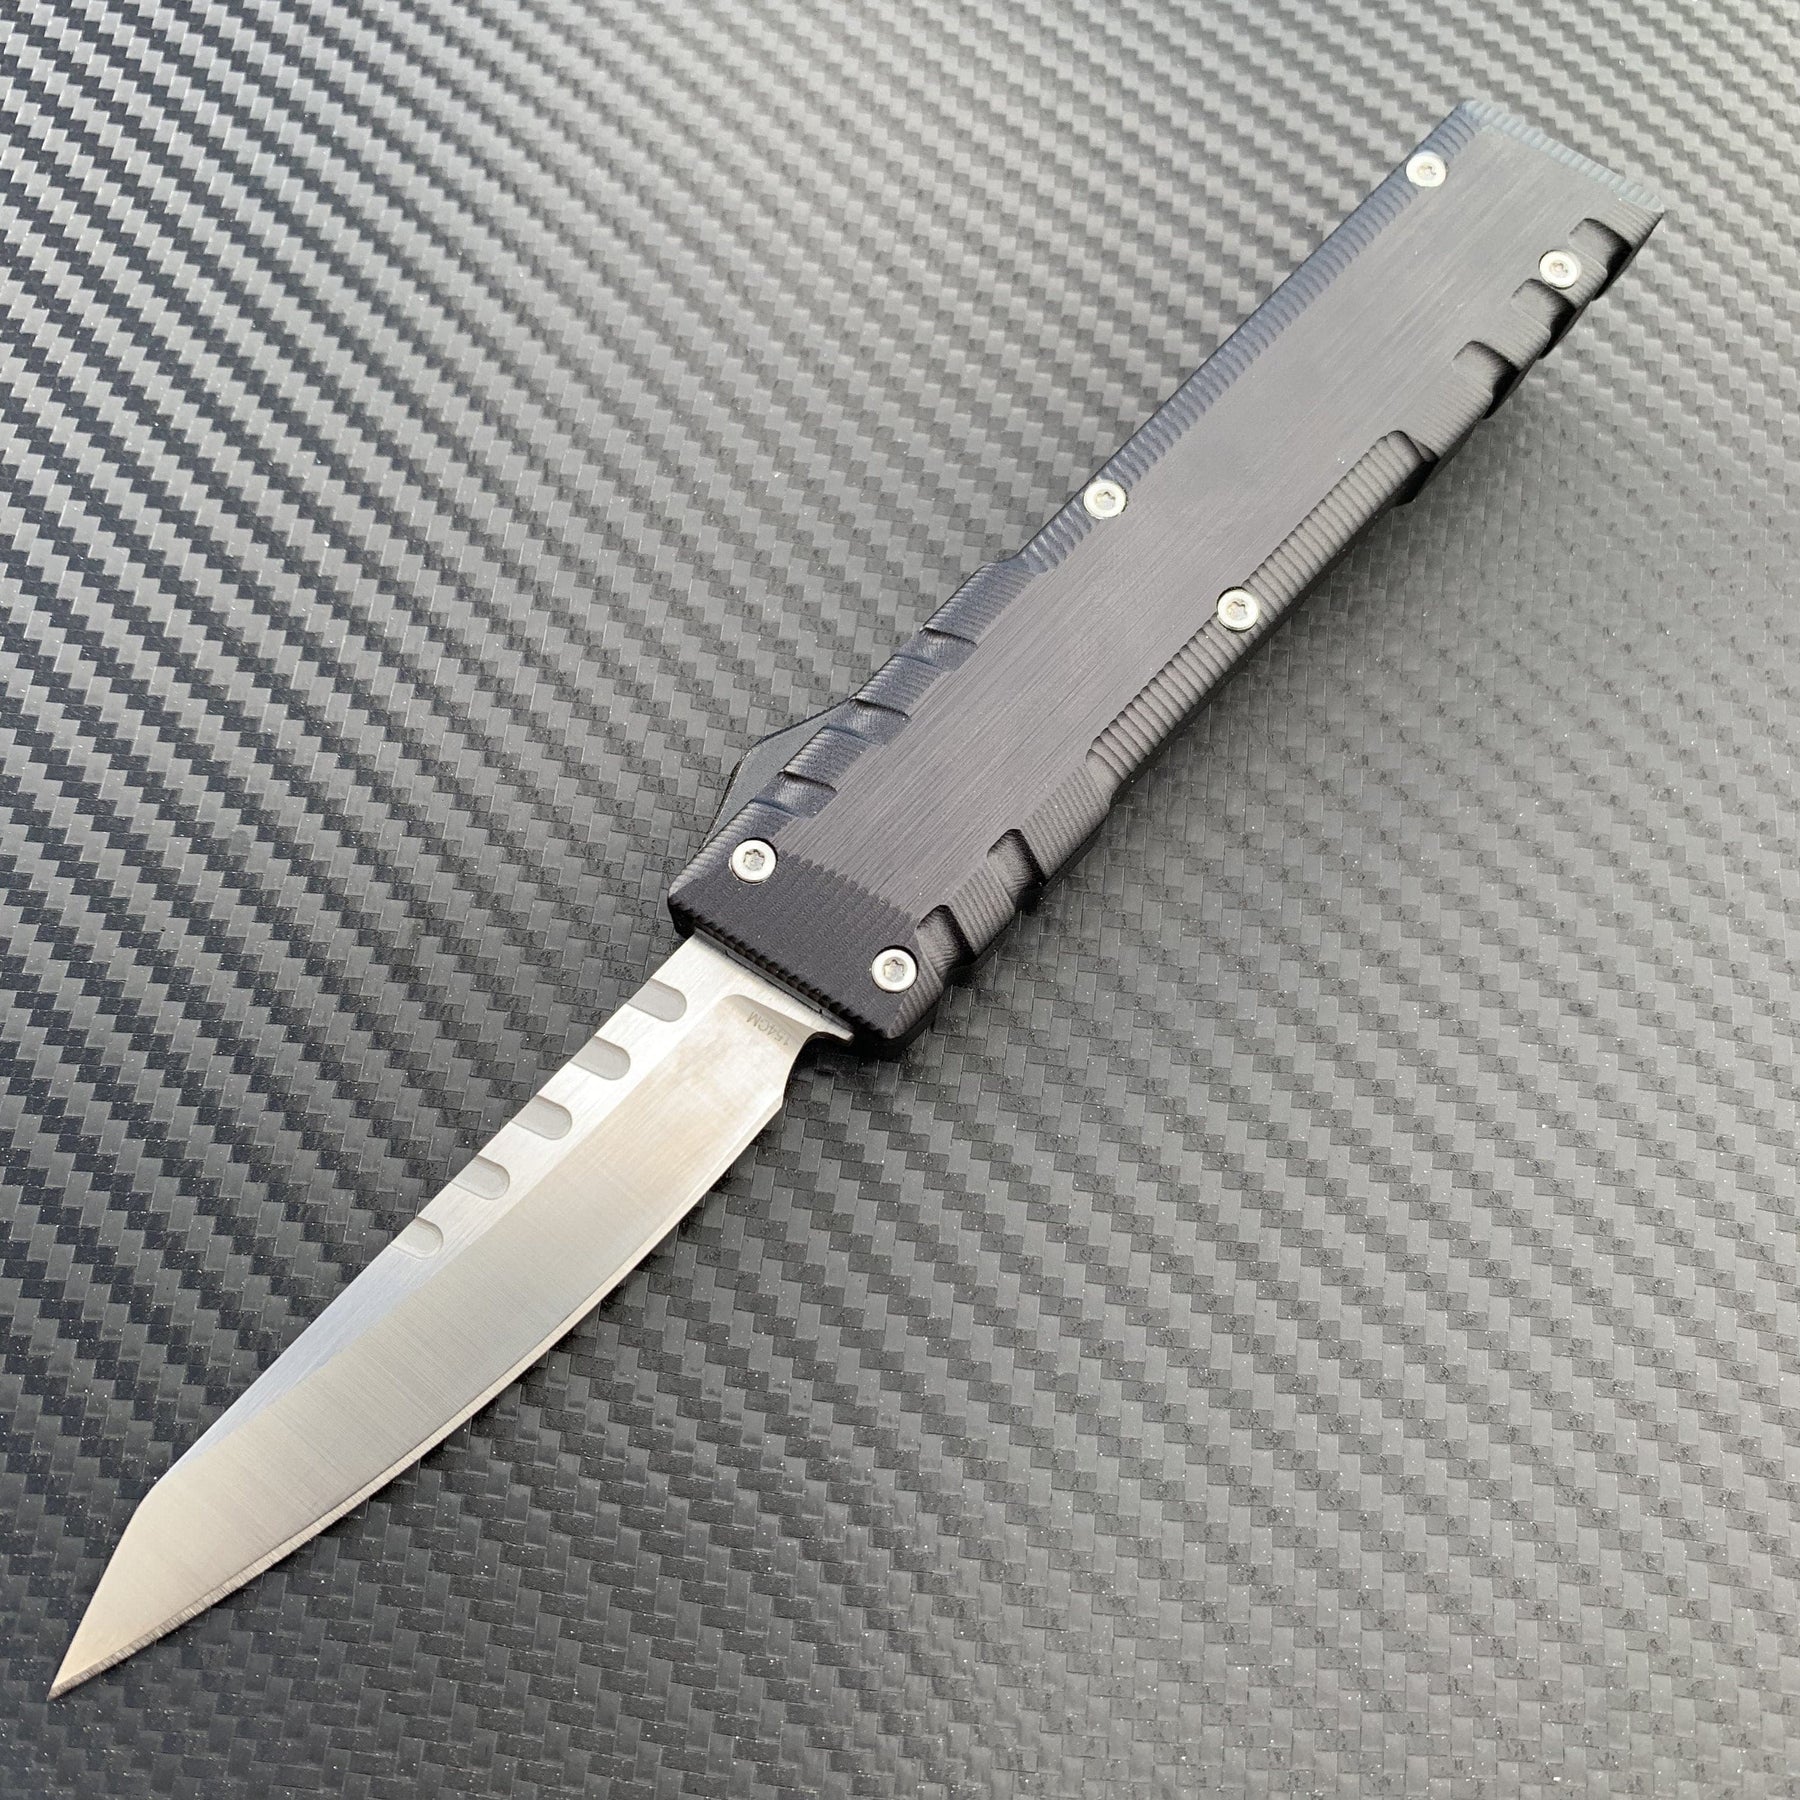 otf knife with premium steel blade